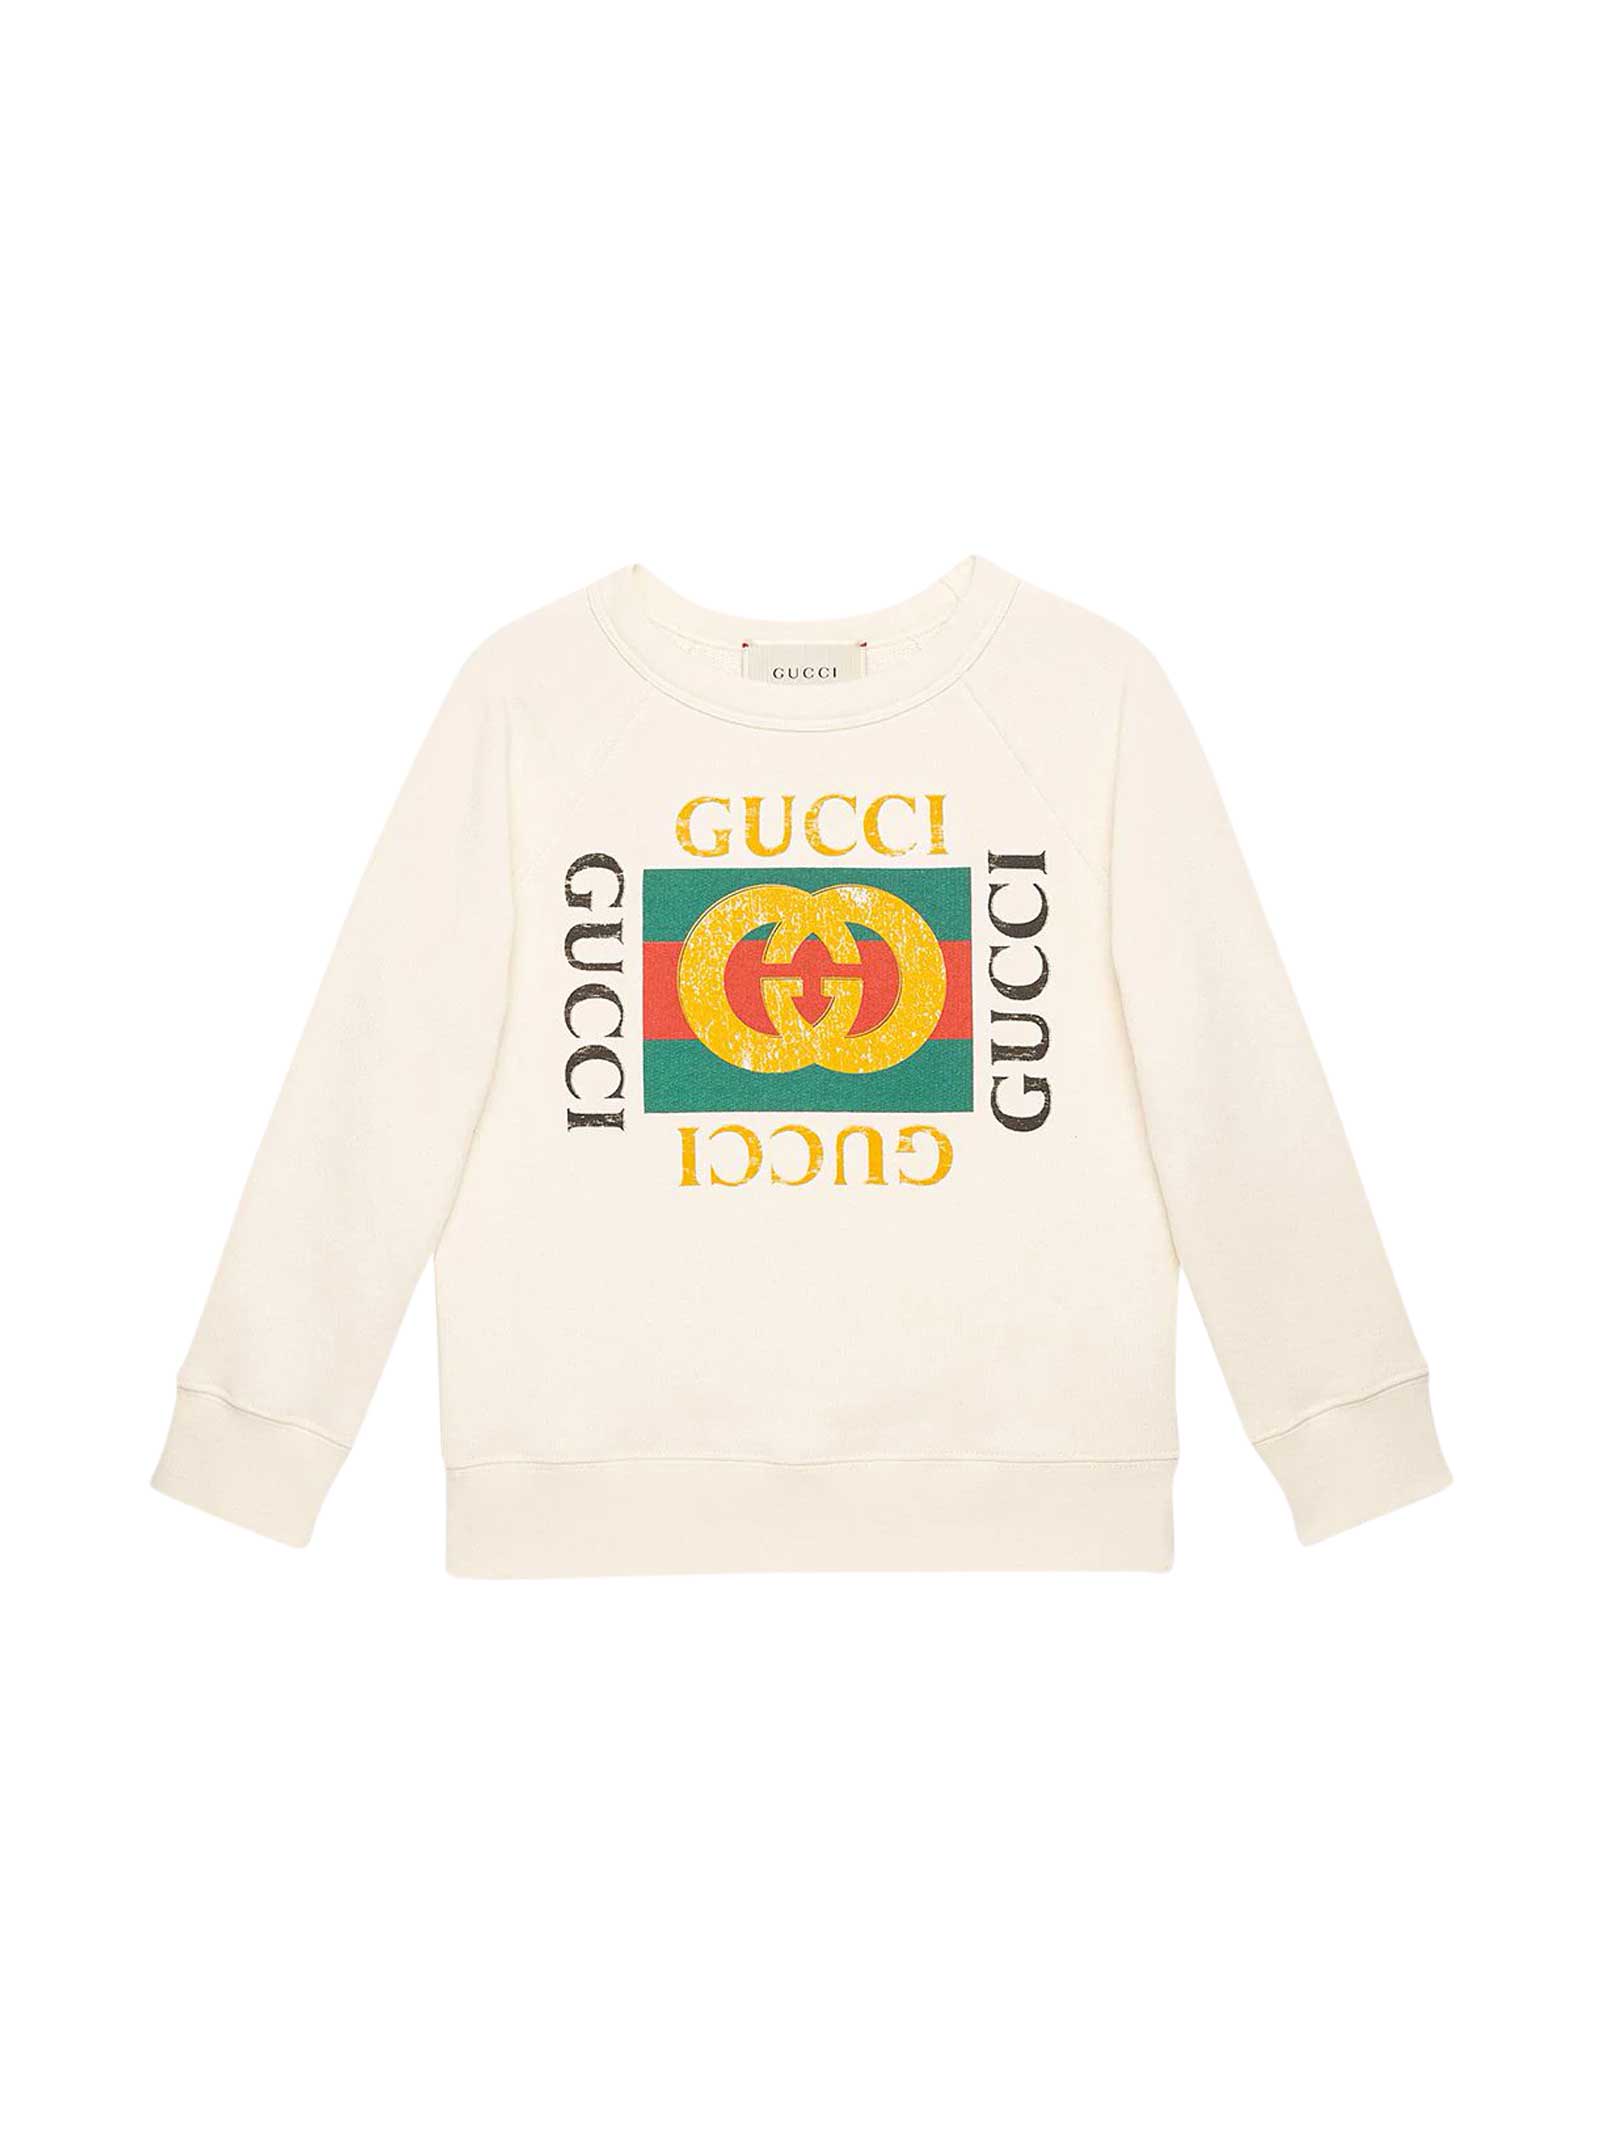 Gucci White Teen Sweatshirt